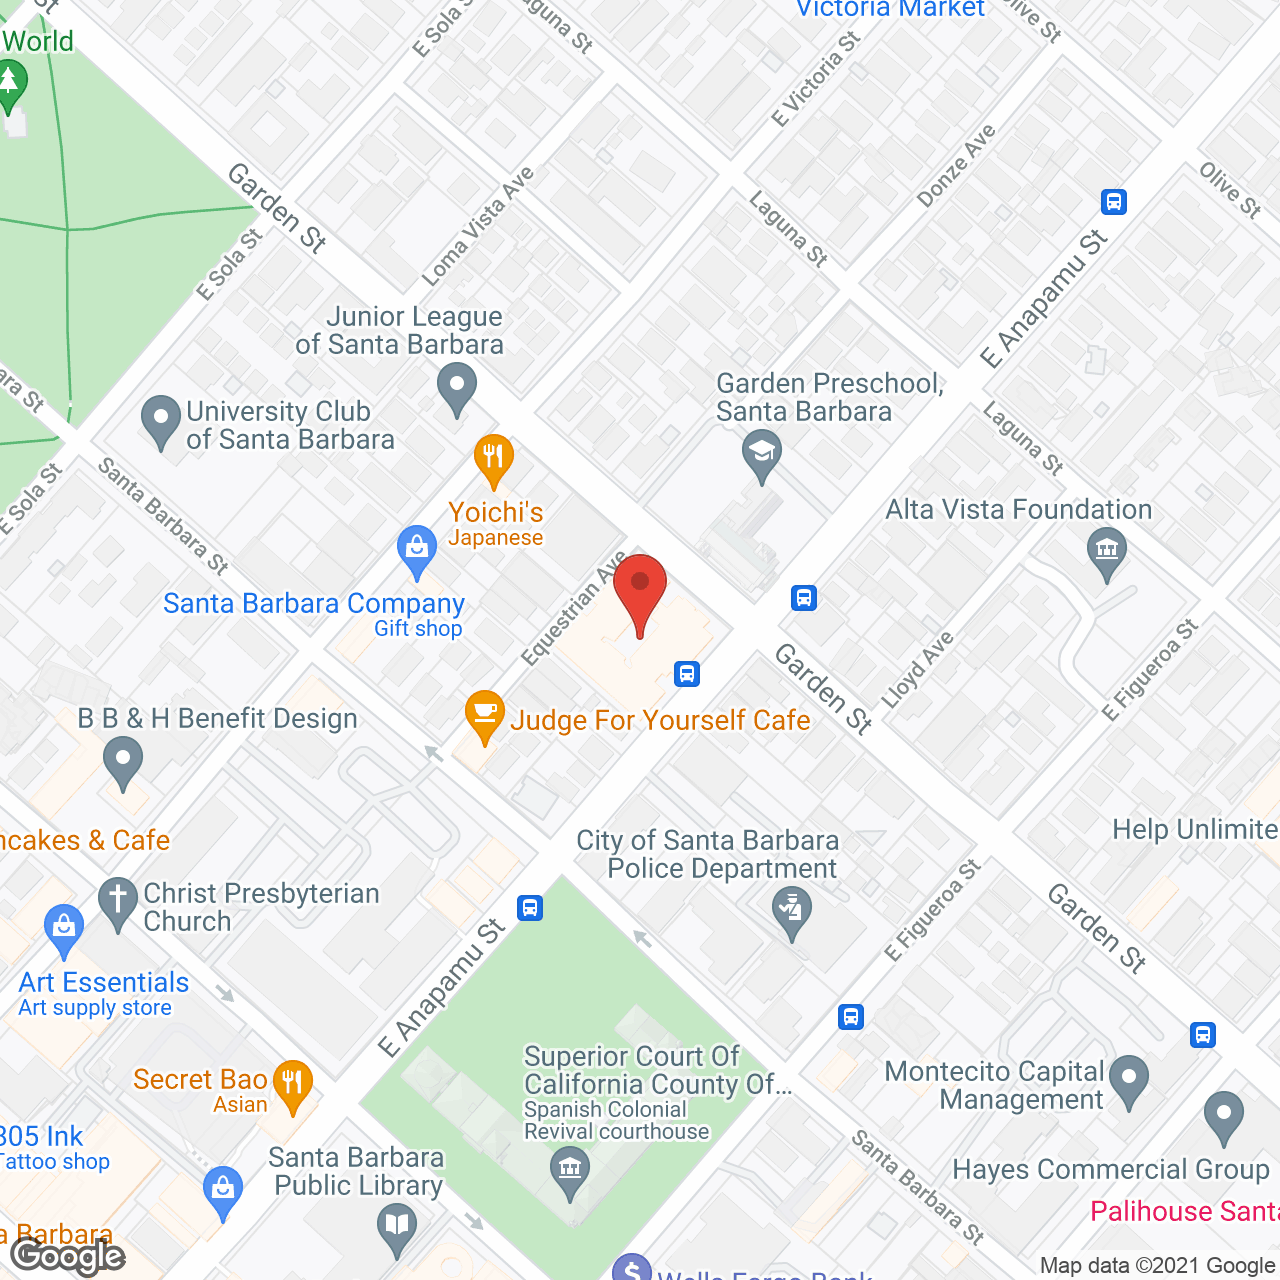 Villa Santa Barbara in google map